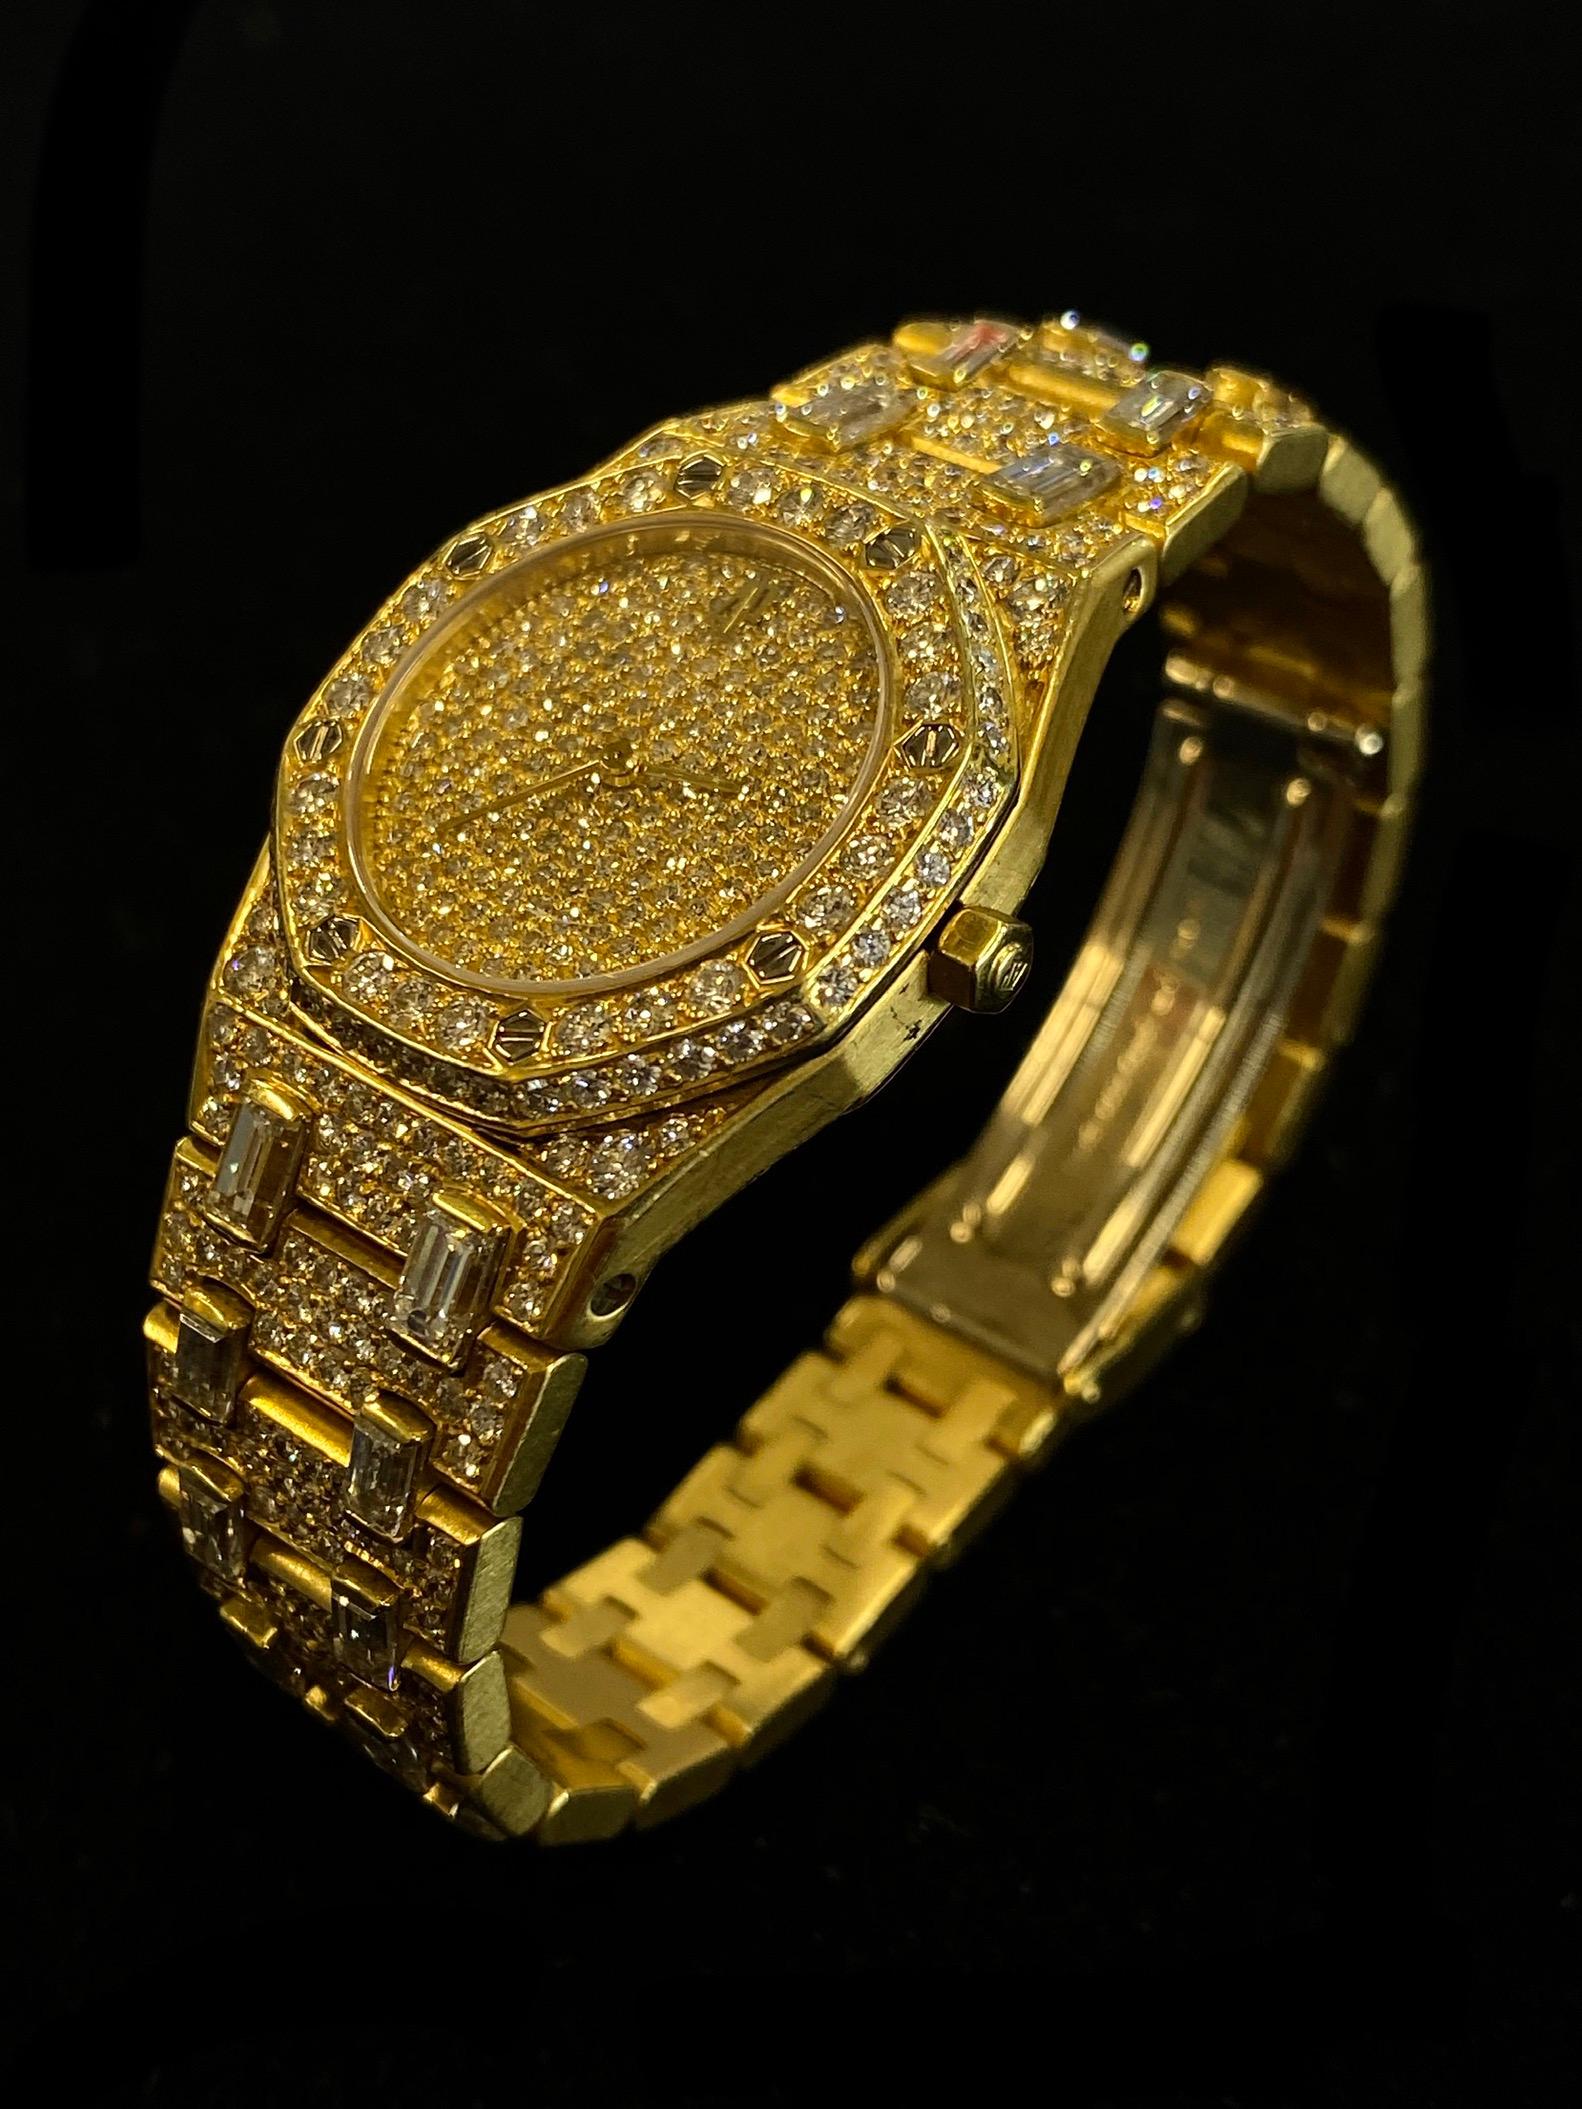 AUDEMARS PIGUET LIMITED EDITION ROYAL OAK 18K YELLOW GOLD LADIES WRISTWATCH W/ APPROX. 664 FACTORY DIAMONDS

ITEM DESCRIPTION: 
With Swiss construction and Audemars-Piguet distinction, this Royal Oak 18K Yellow Gold wristwatch keeps time as